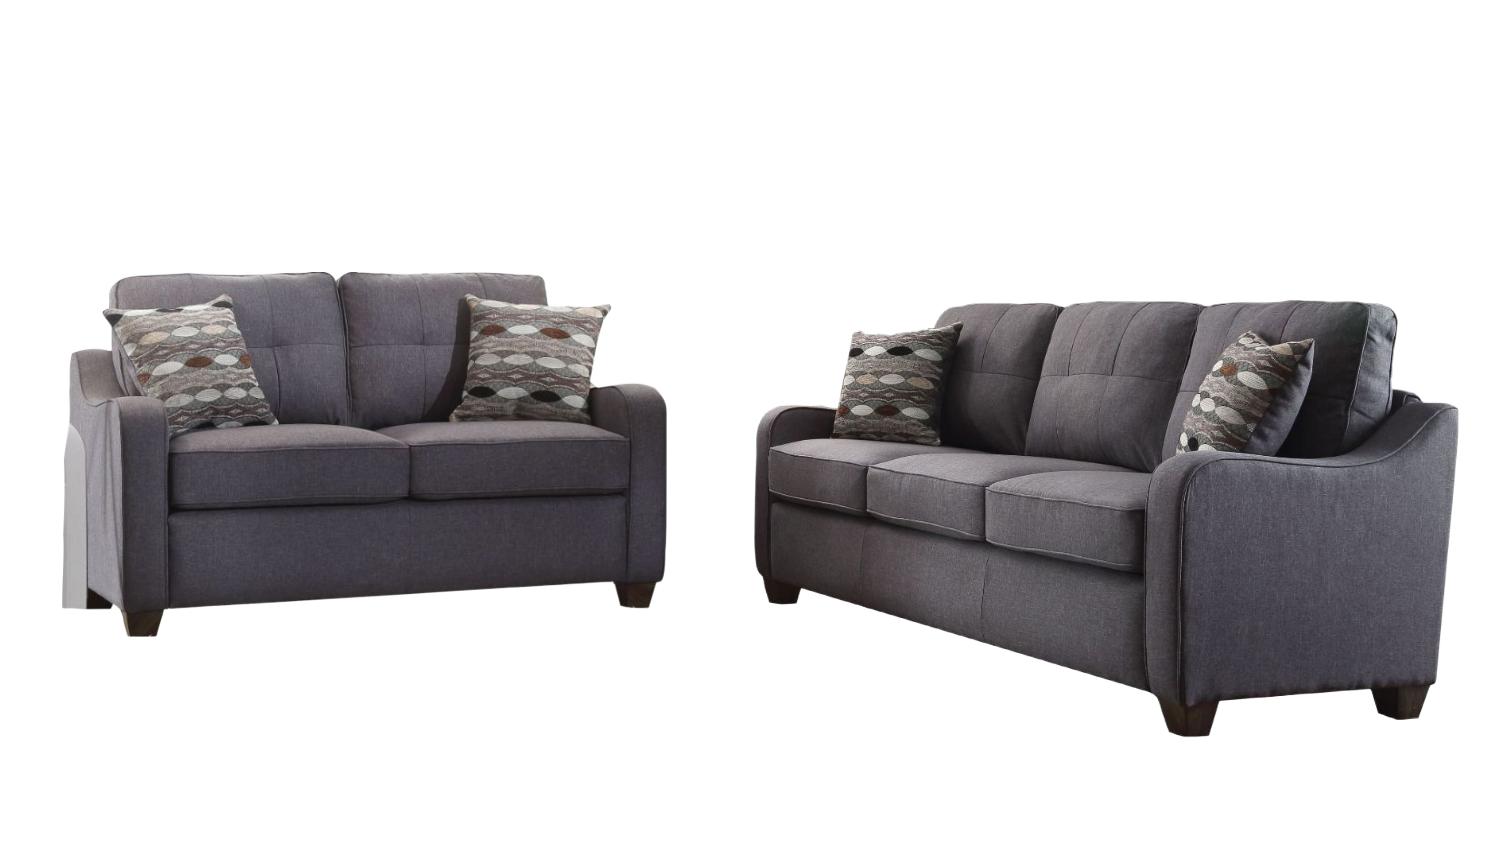 Modern Sofa and Loveseat Cleavon II 53790-2pcs in Gray Linen